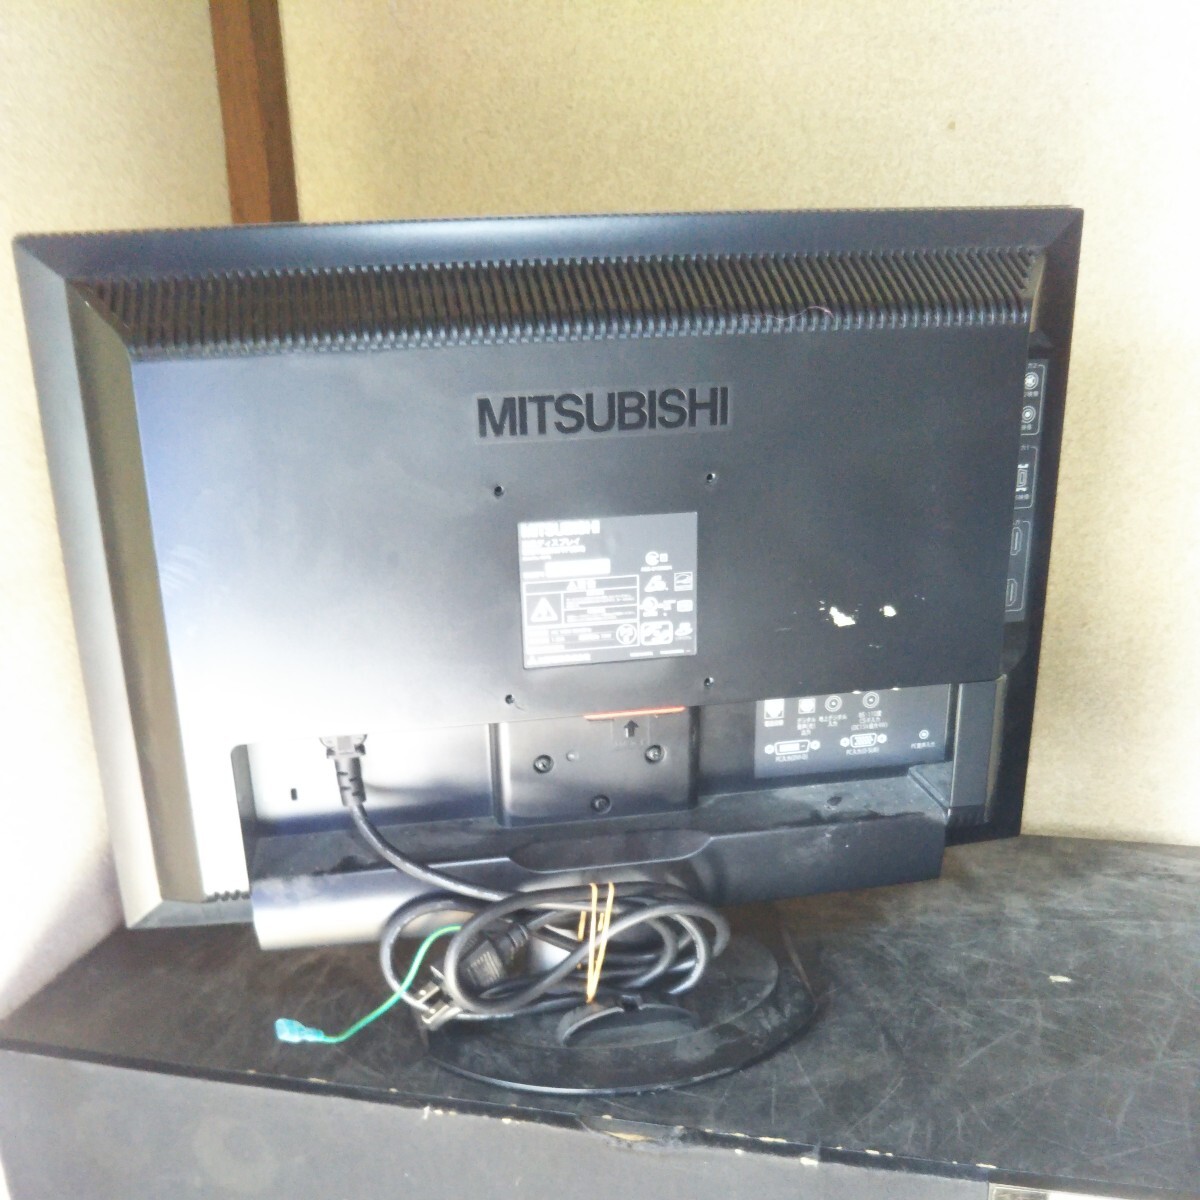  free shipping (M542) Mitsubishi MMC MITSUBISHI liquid crystal tv-set MDT22IWTF